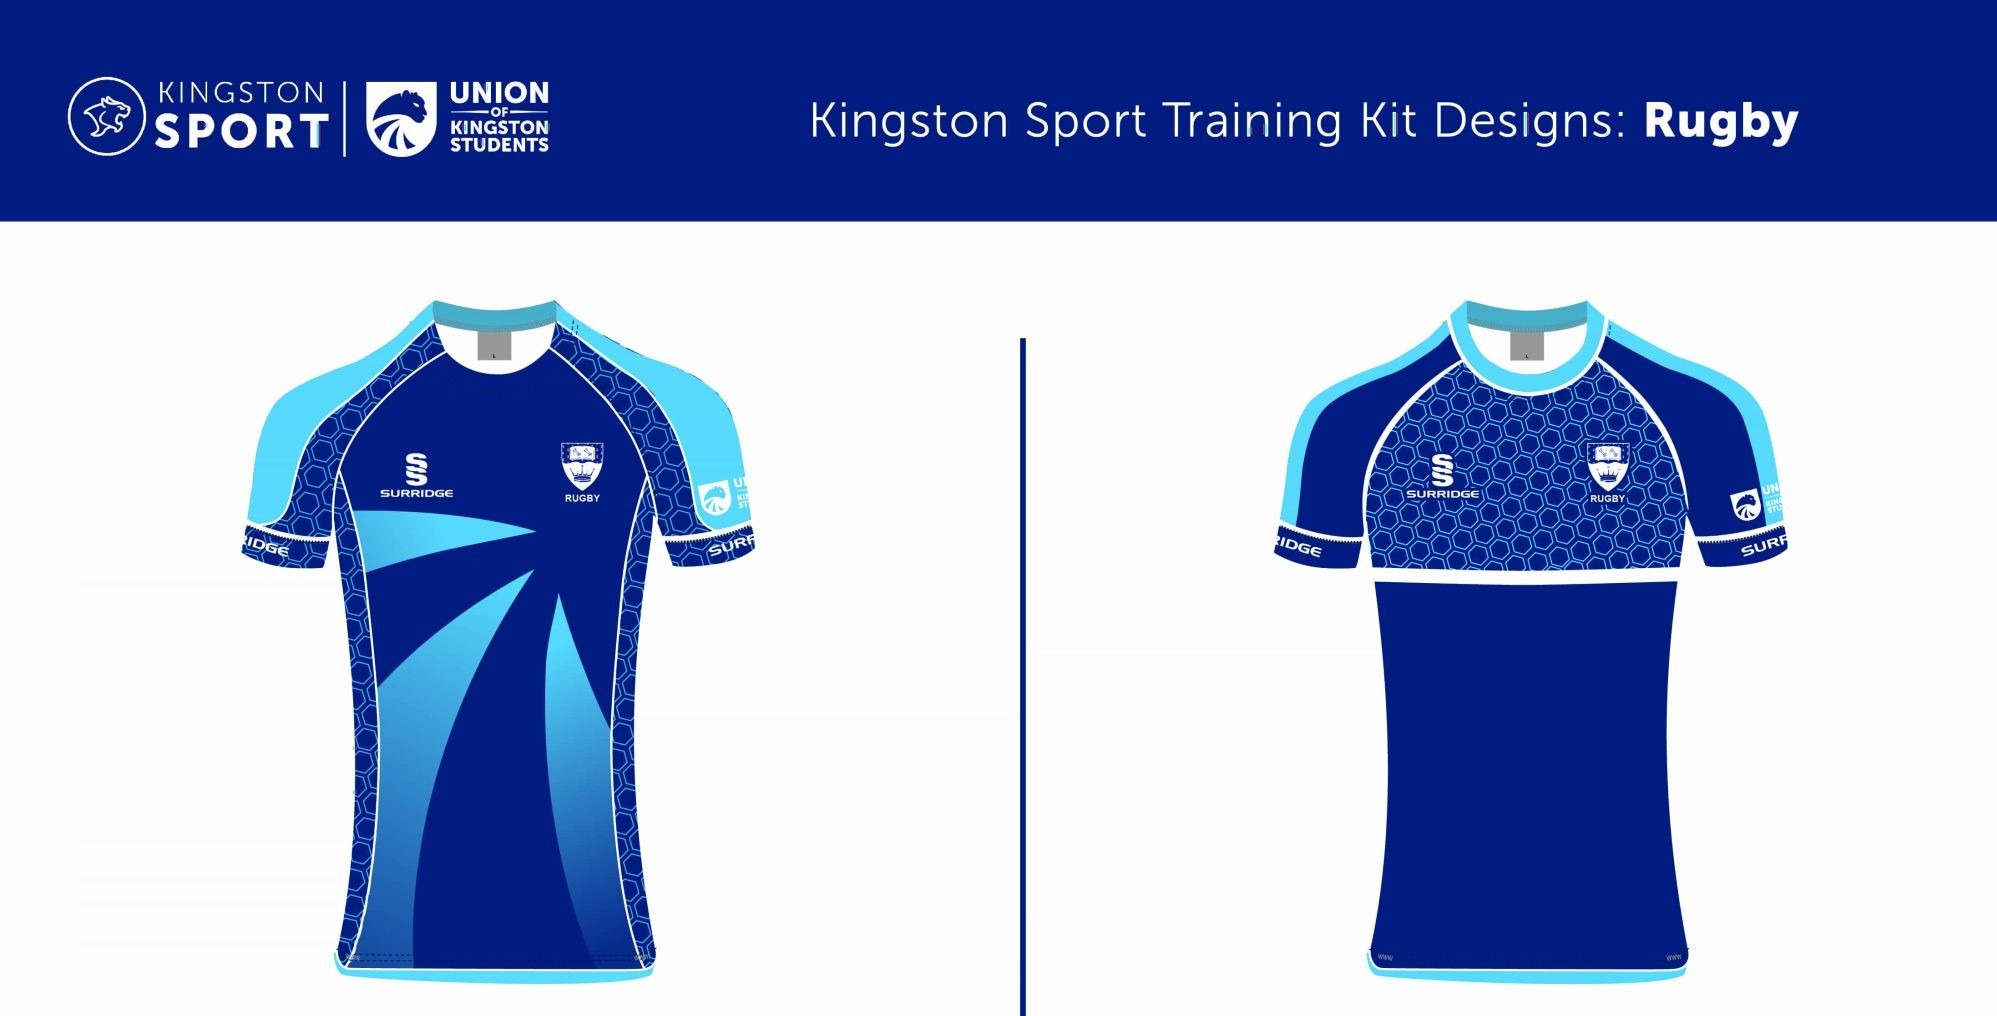 Kingston Student Union running poll on new sports kits